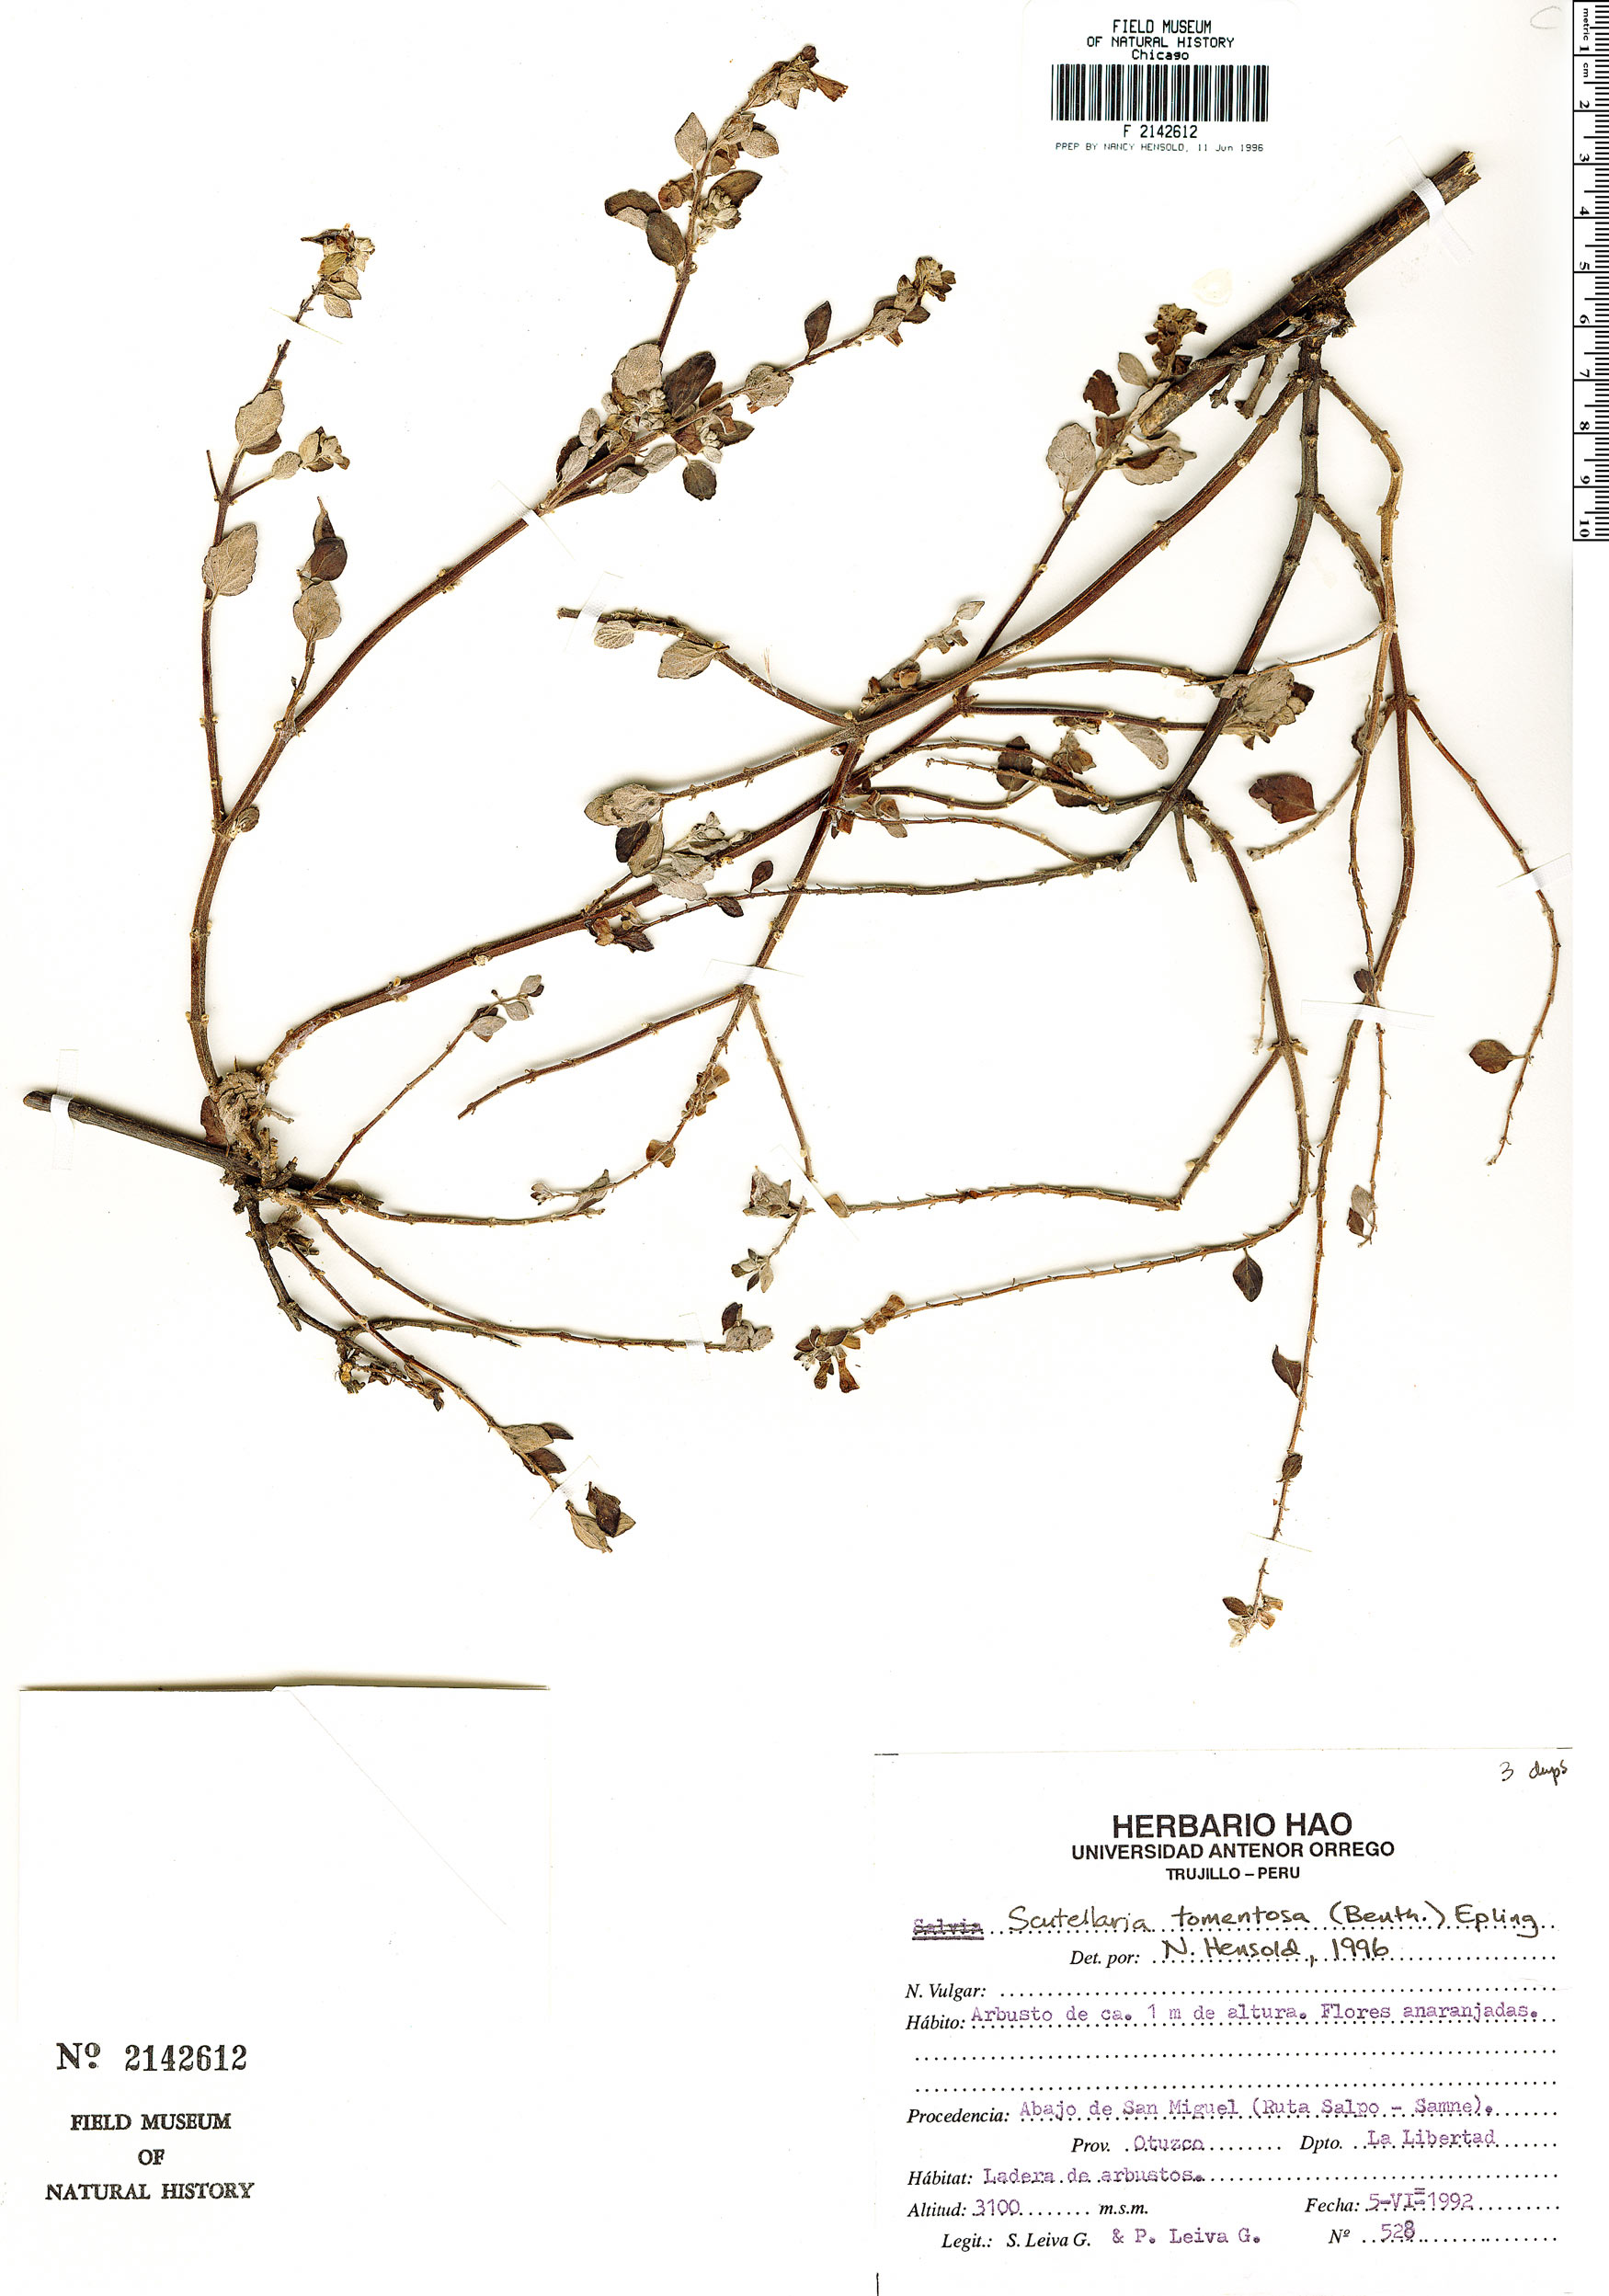 Scutellaria tomentosa image